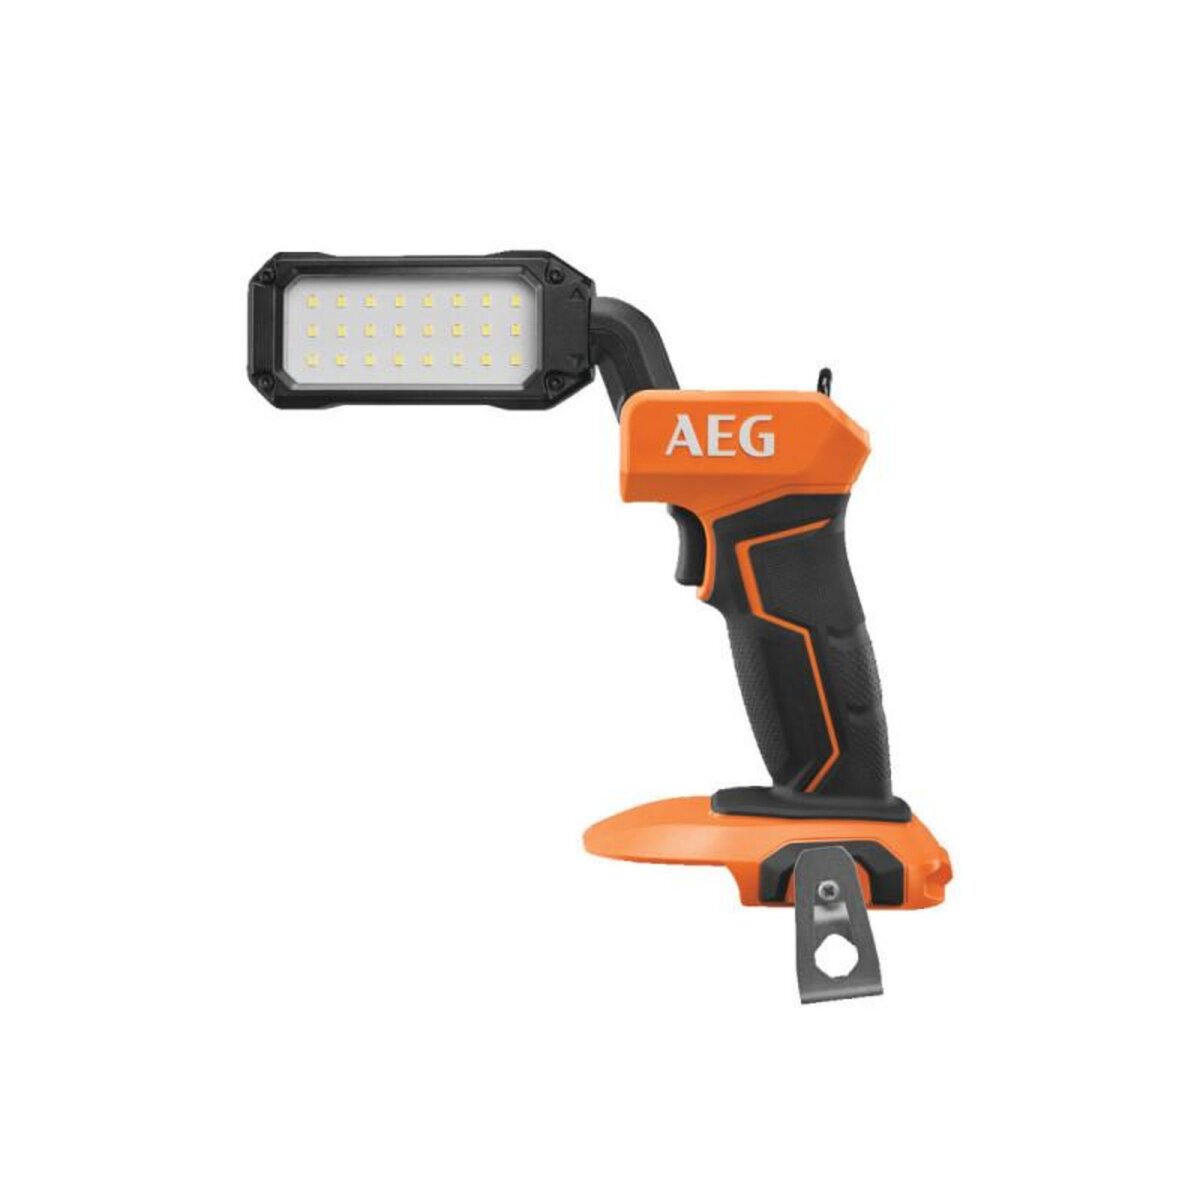 AEG Lampe d'inspection led AEG 18V - tête pivotante - 800 lumens - sans batterie ni chargeur - BSL18-1